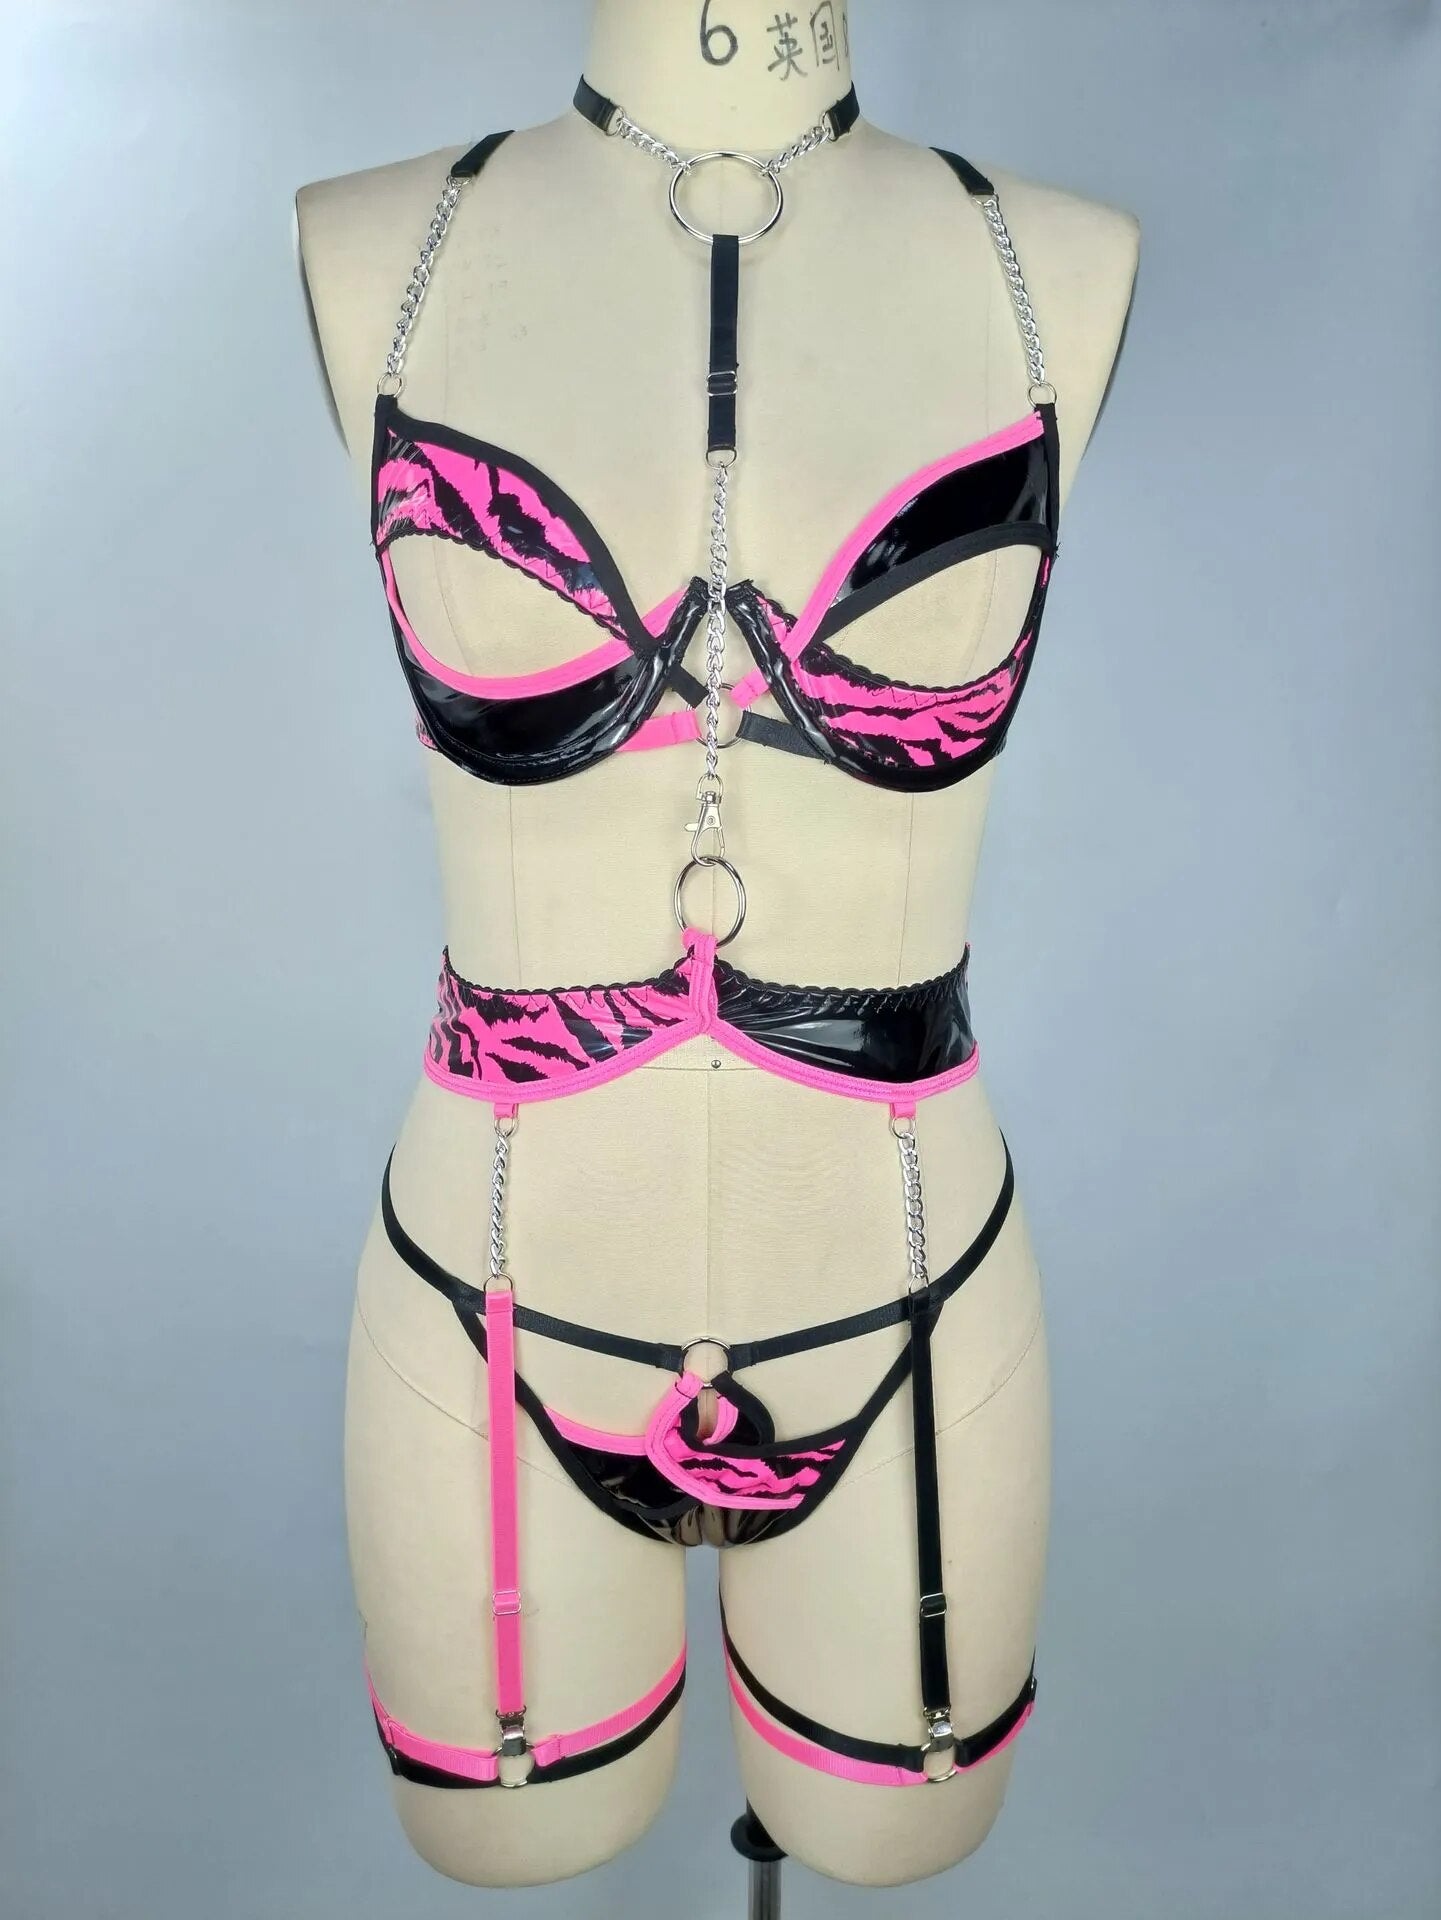 Zebra Leather Lingerie Hollow Out Bra Kit Push Up Sensual Halter Garter Belt Set Sissy Contrast Color  Outfits